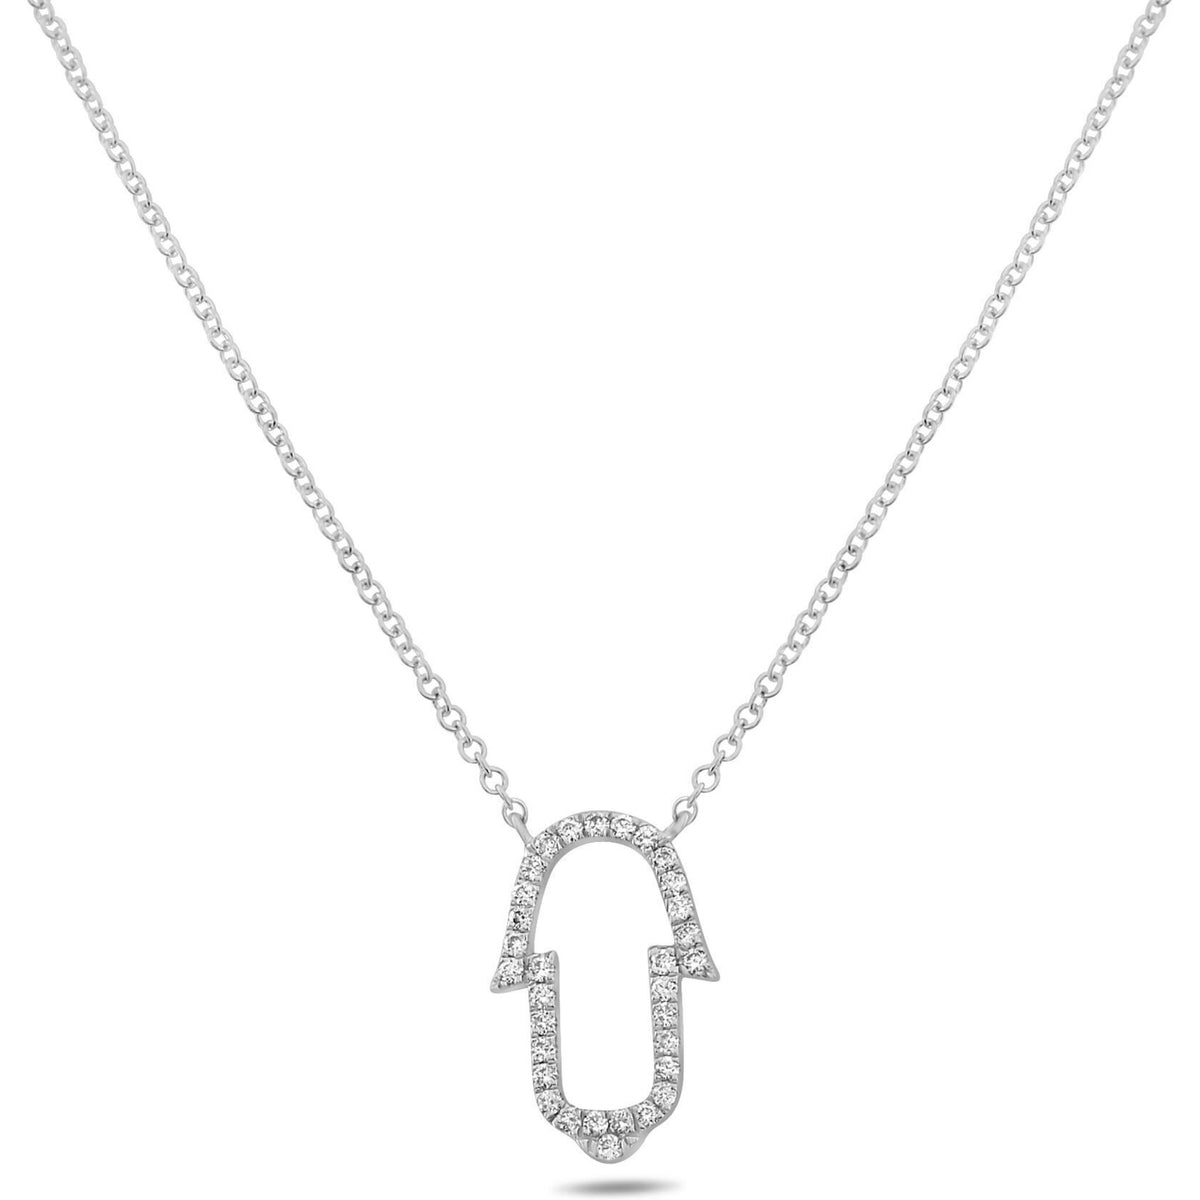 Roman & Jules 14K White Gold Curved Diamond Pave Necklace - 0.15 Carat Diamond Weight